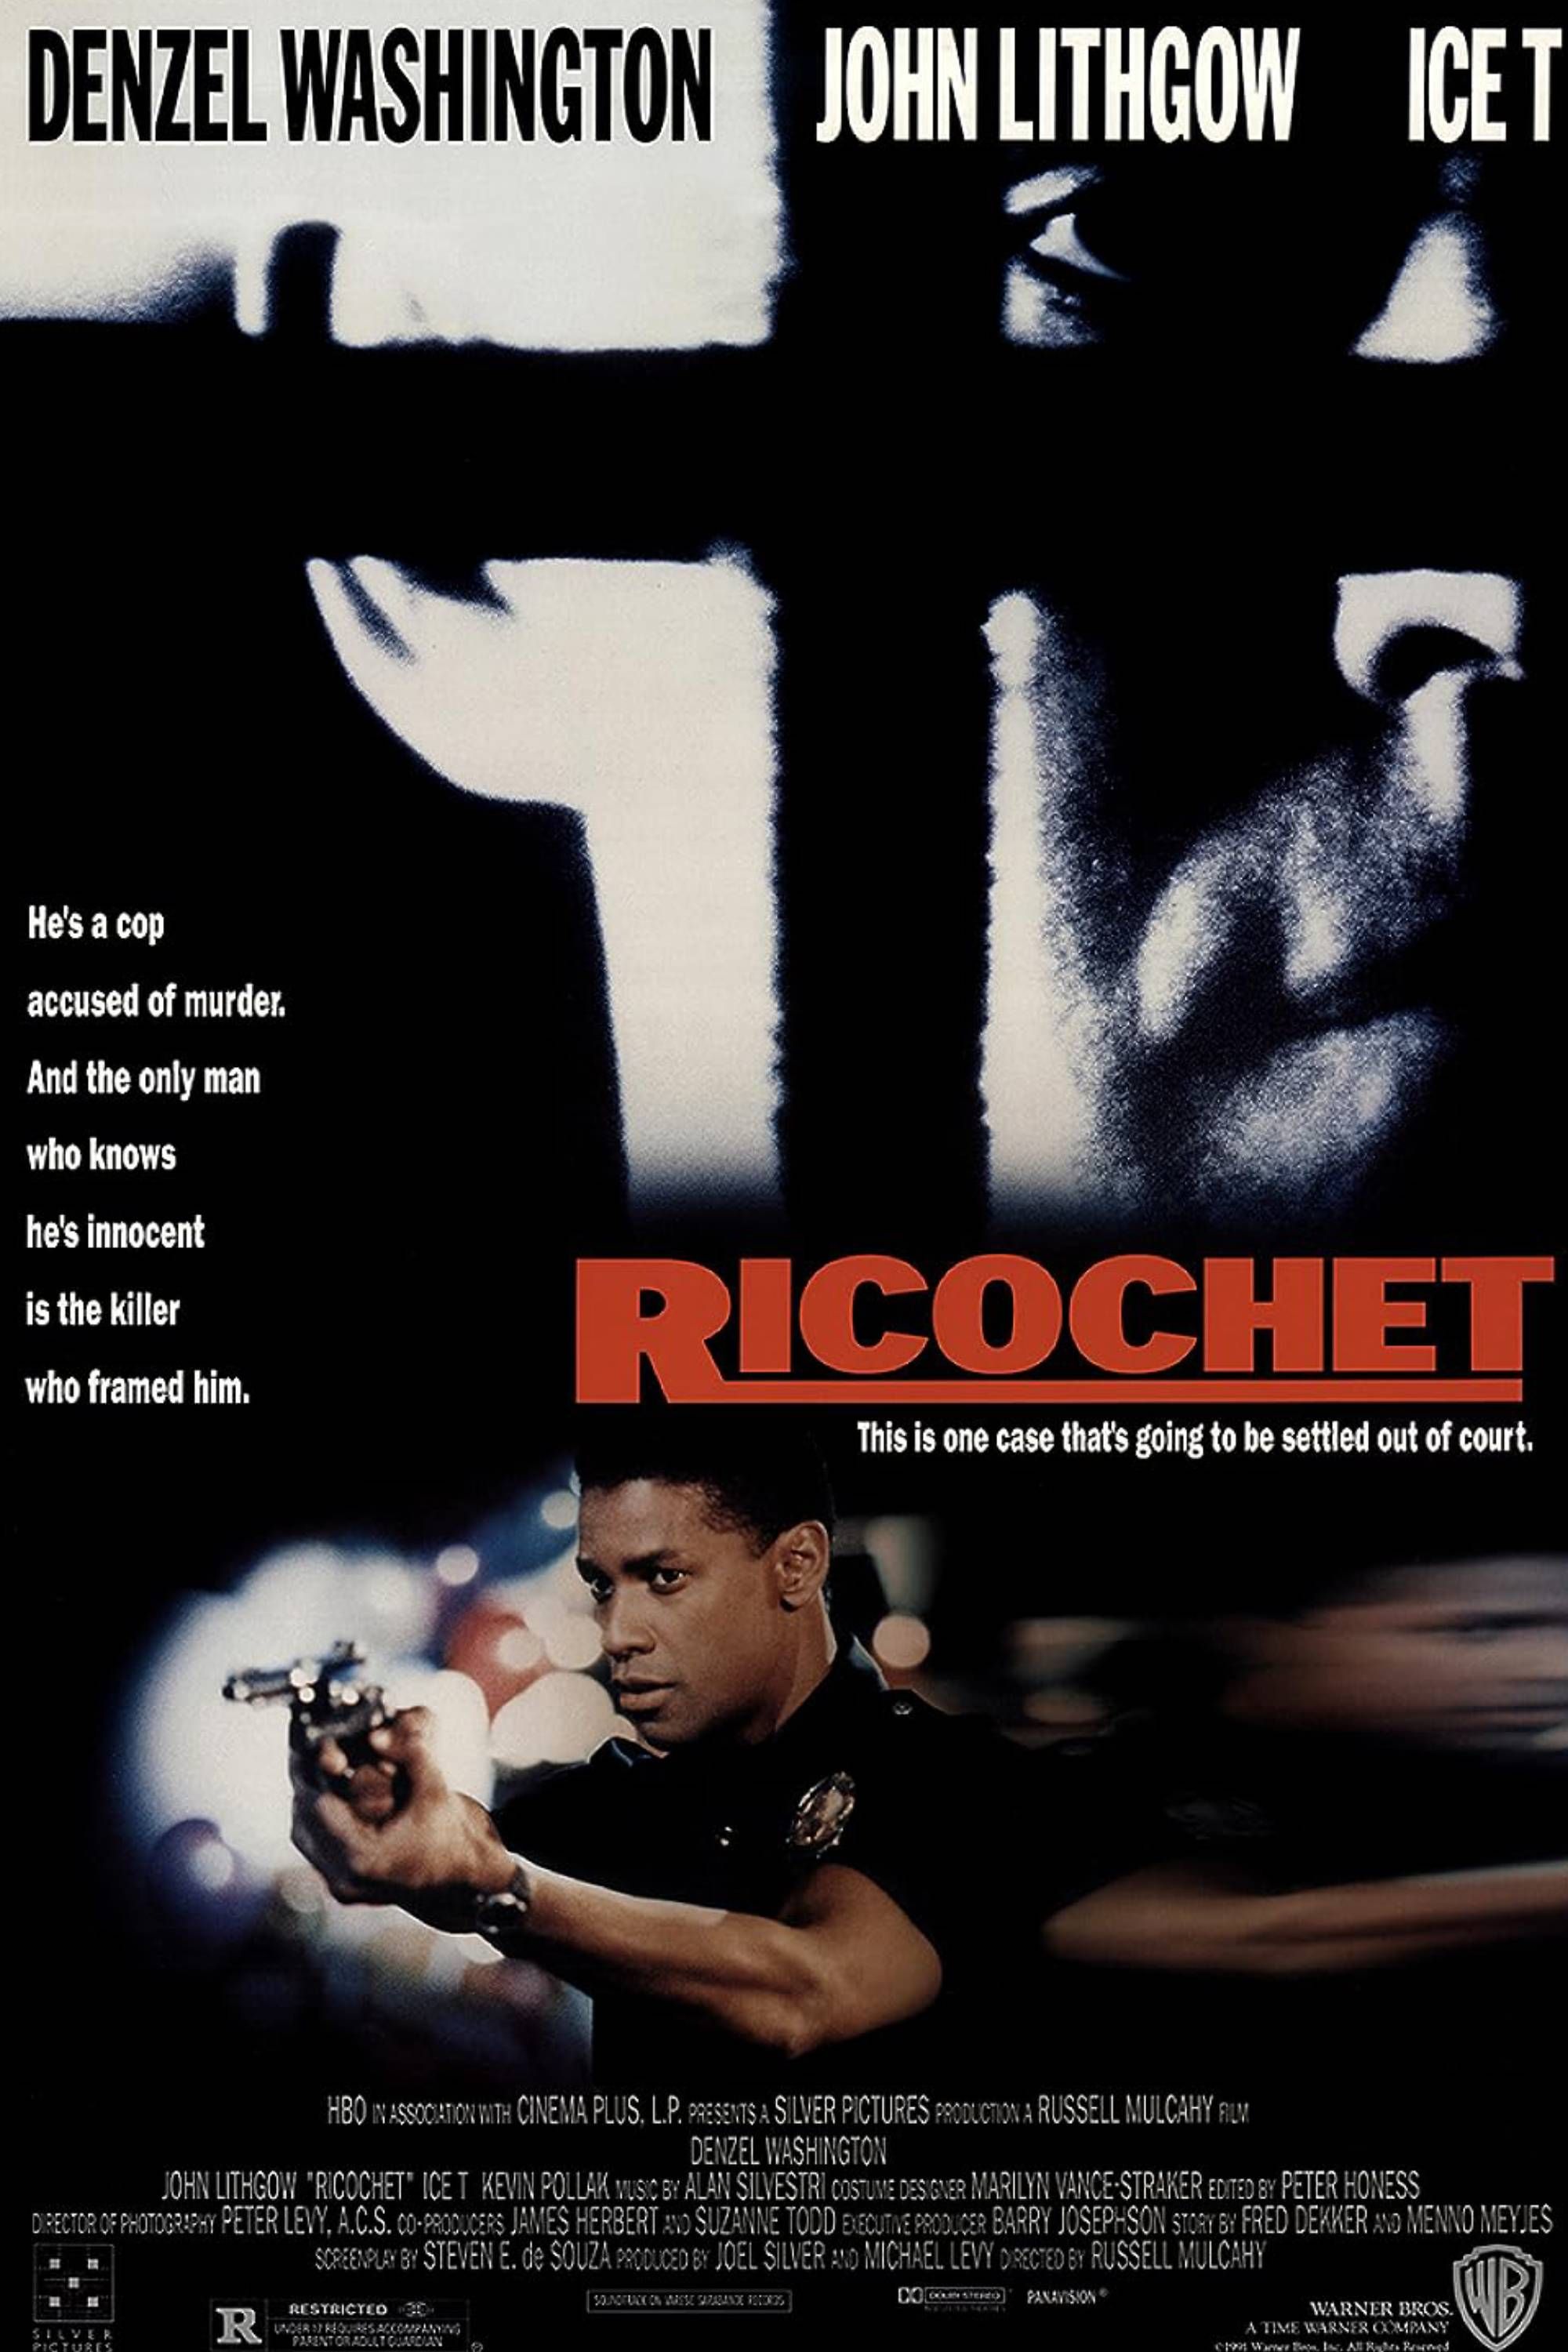 Ricochet (1991) - Poster - Denzel Washingtion as a cop